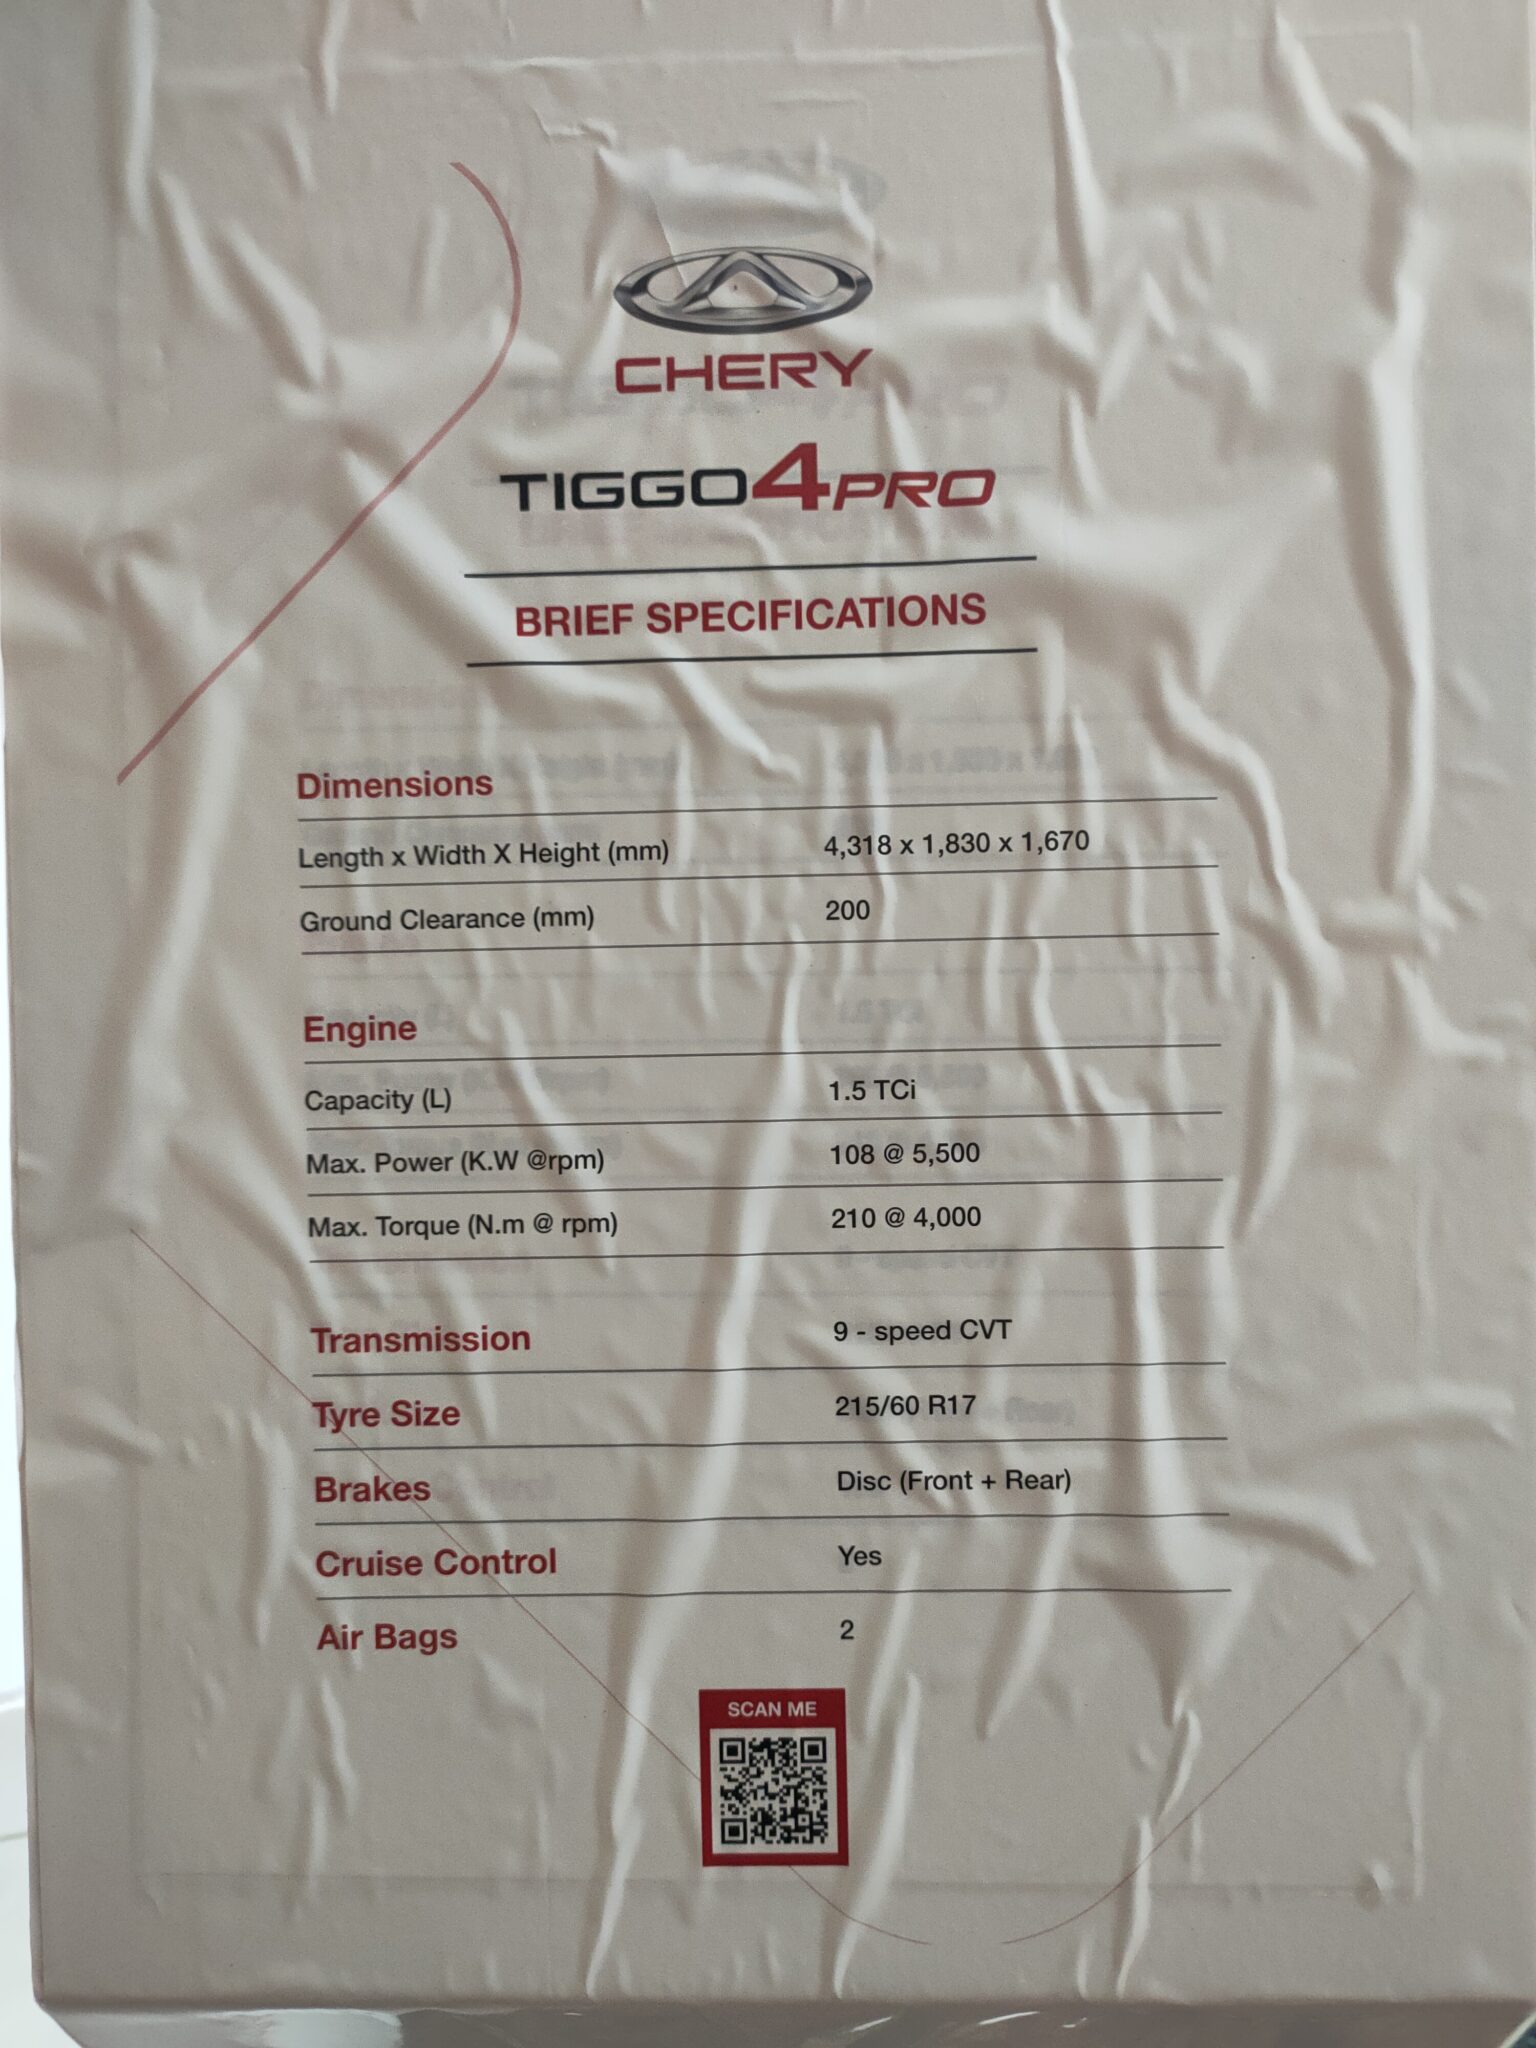 Official Specifications chery tiggo 4 pro